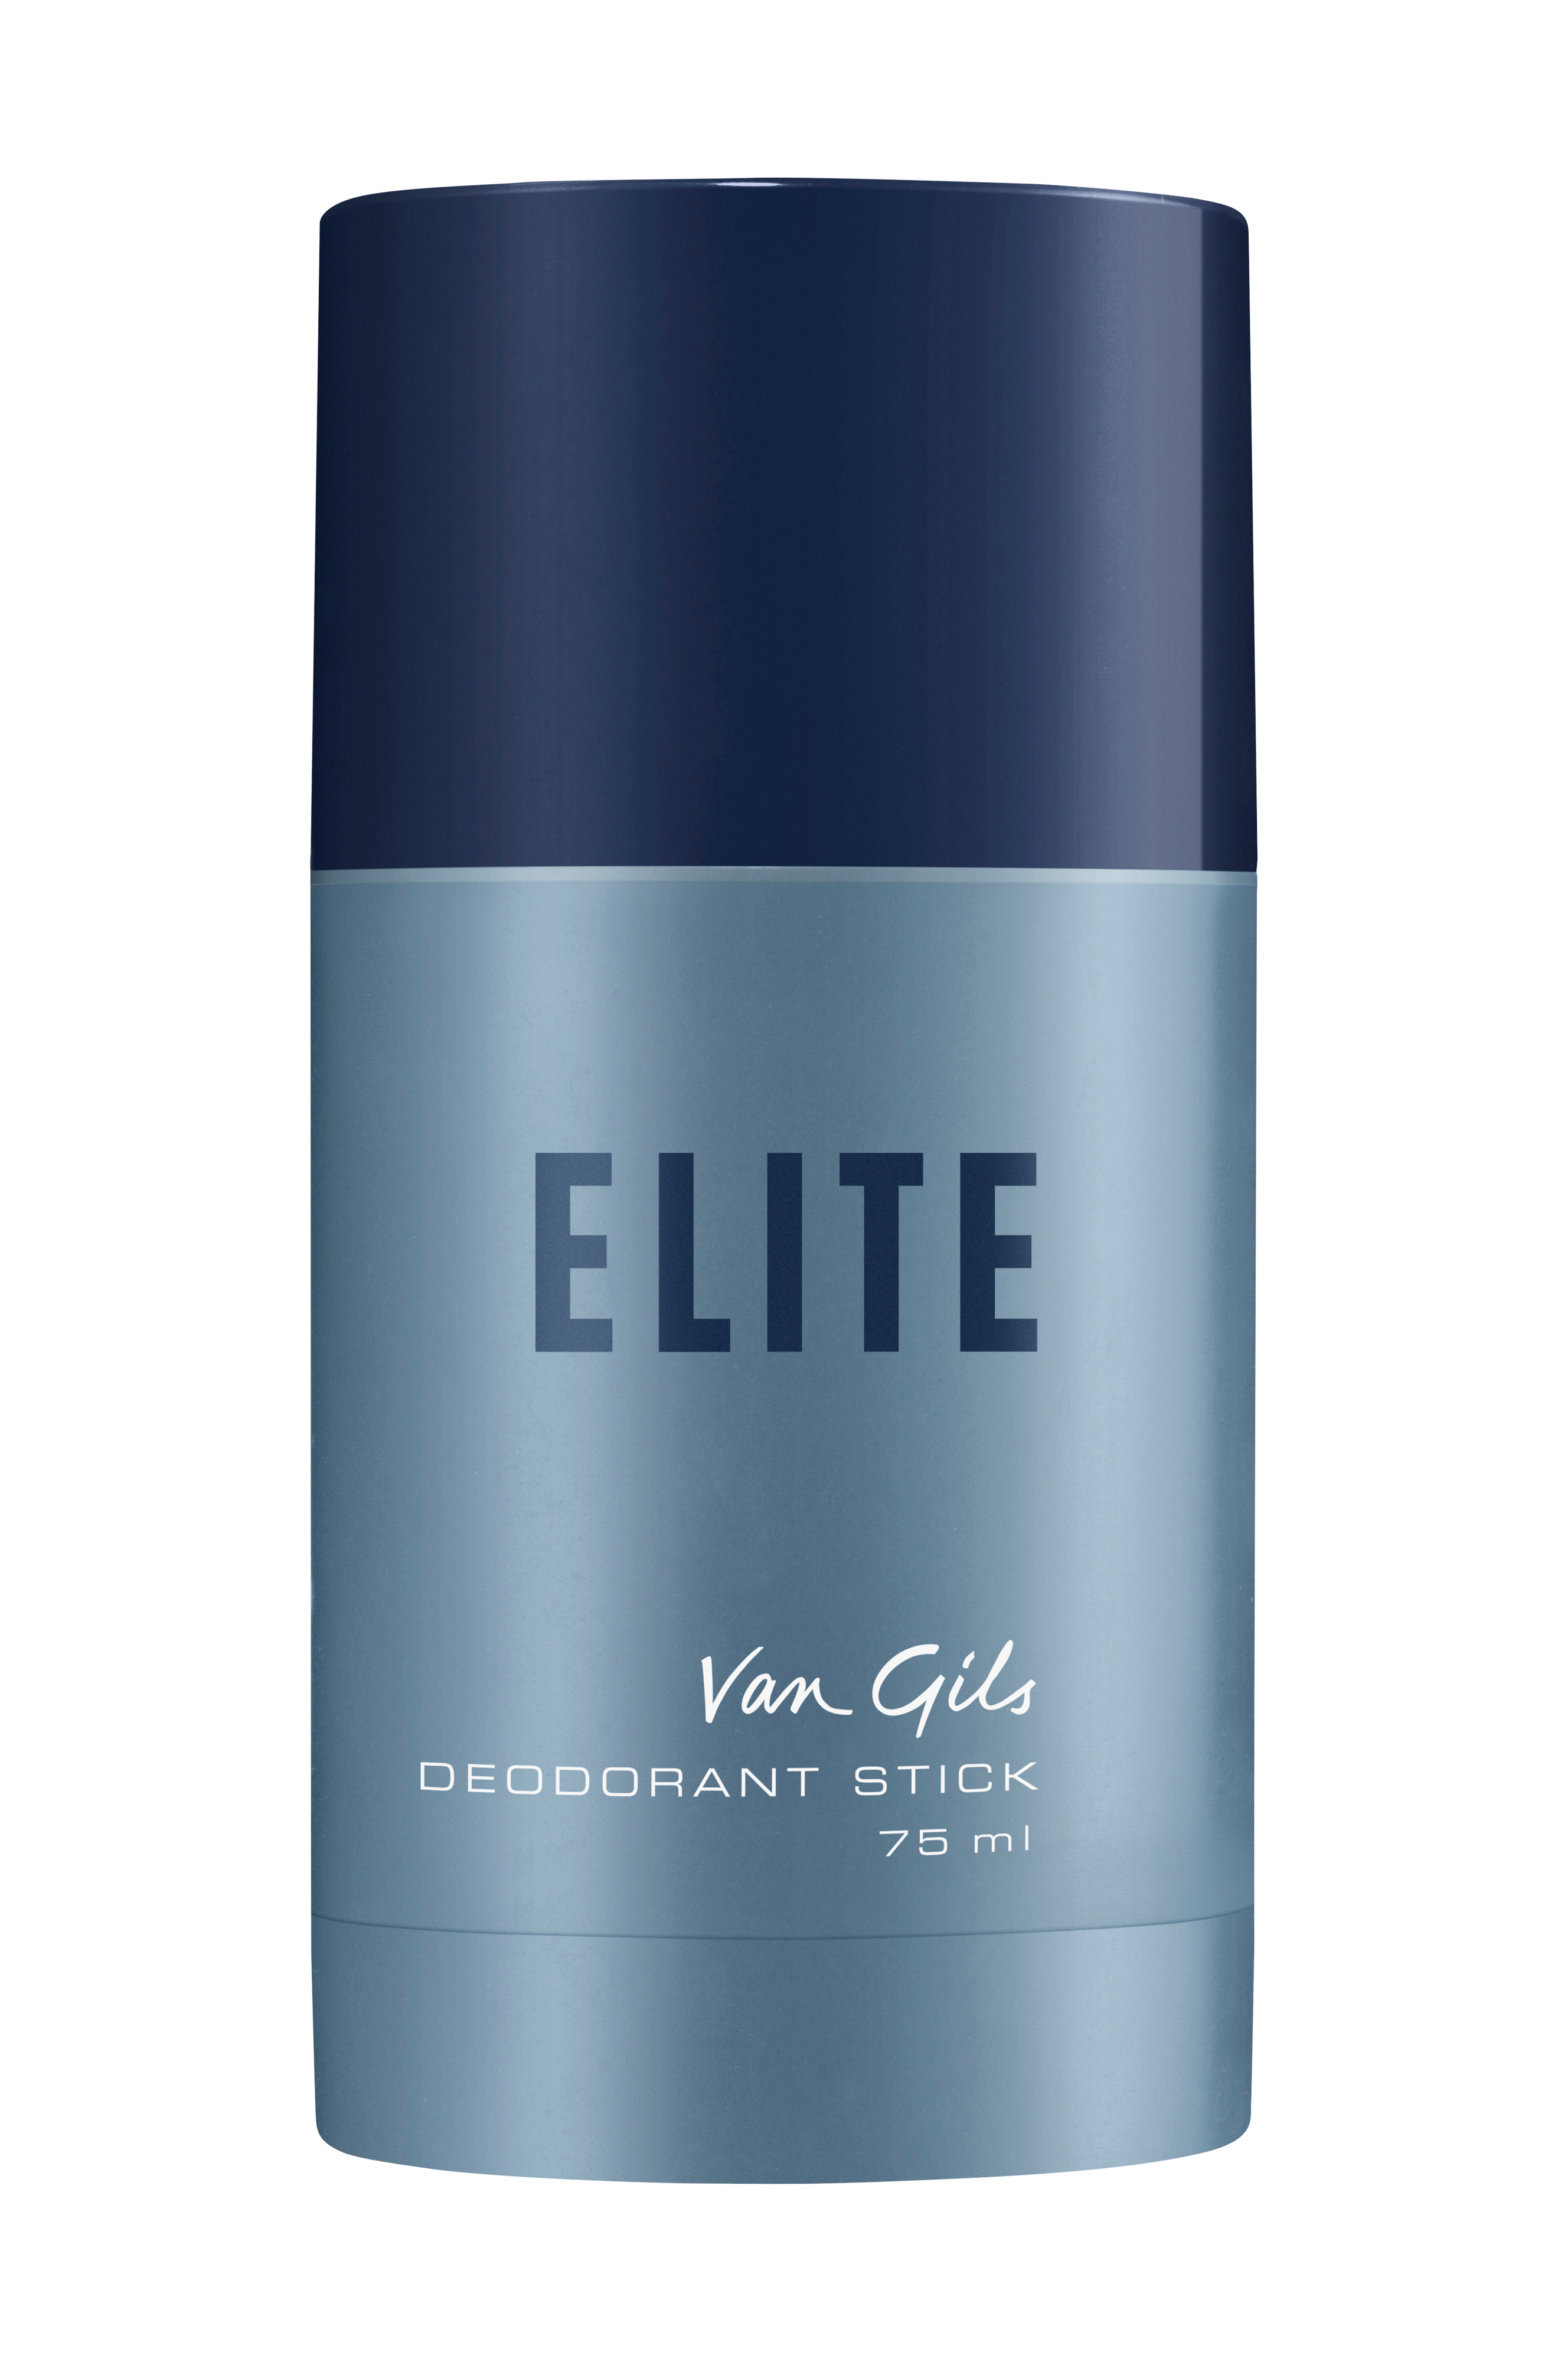 Afvist spion ekspedition Van Gils Elite Deostick 75 ml - Deodorant | Ellos.dk